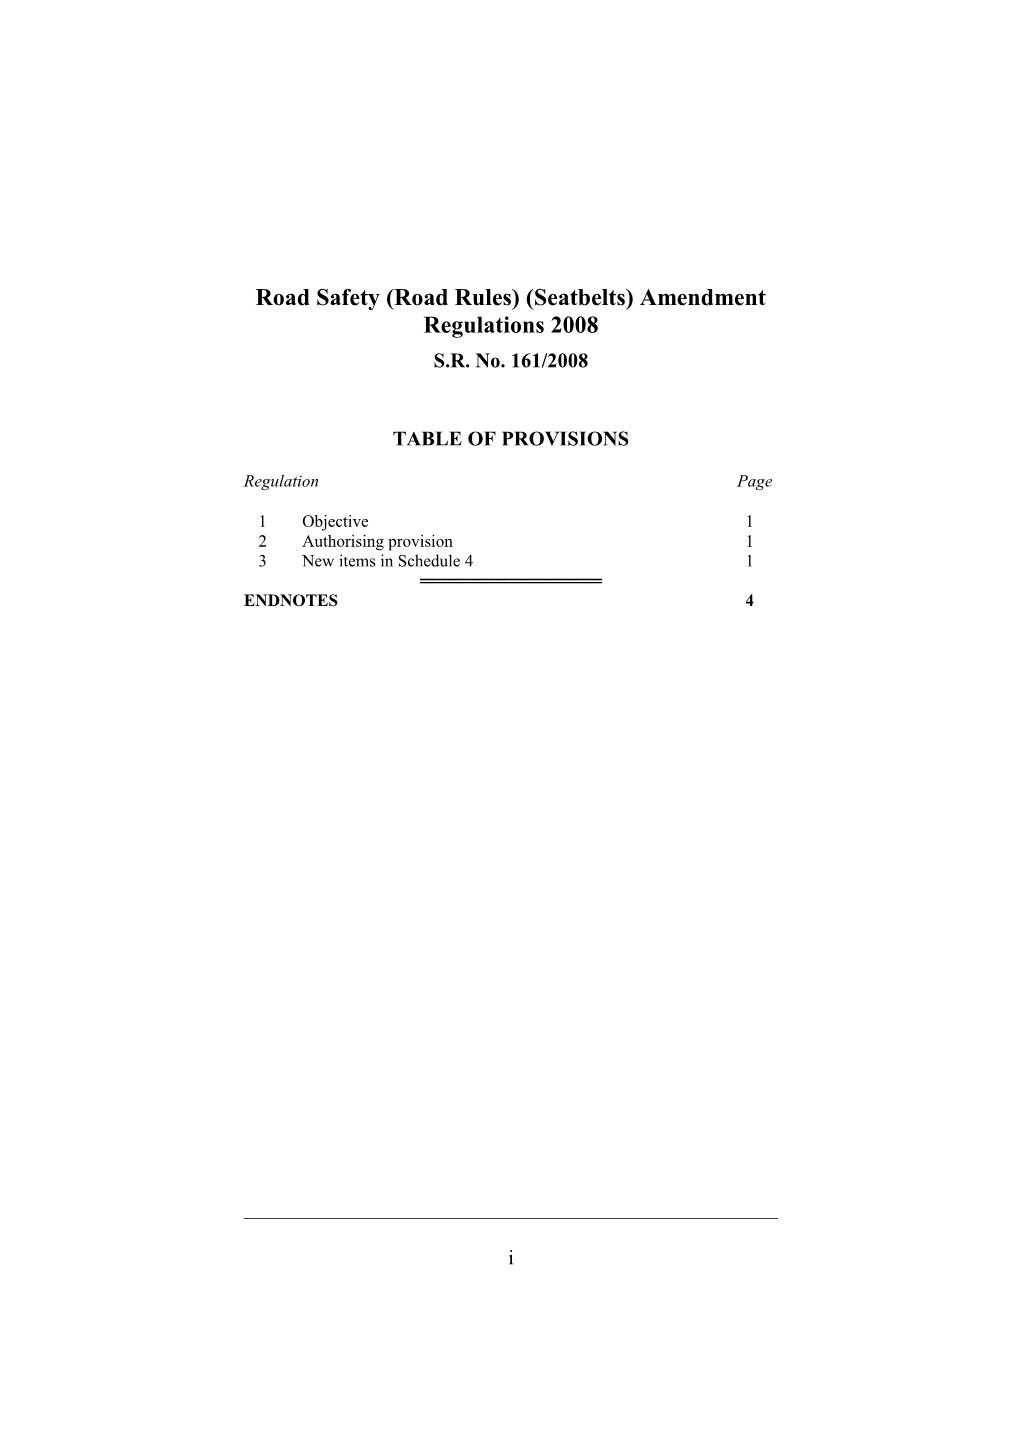 Road Safety (Road Rules) (Seatbelts) Amendment Regulations 2008